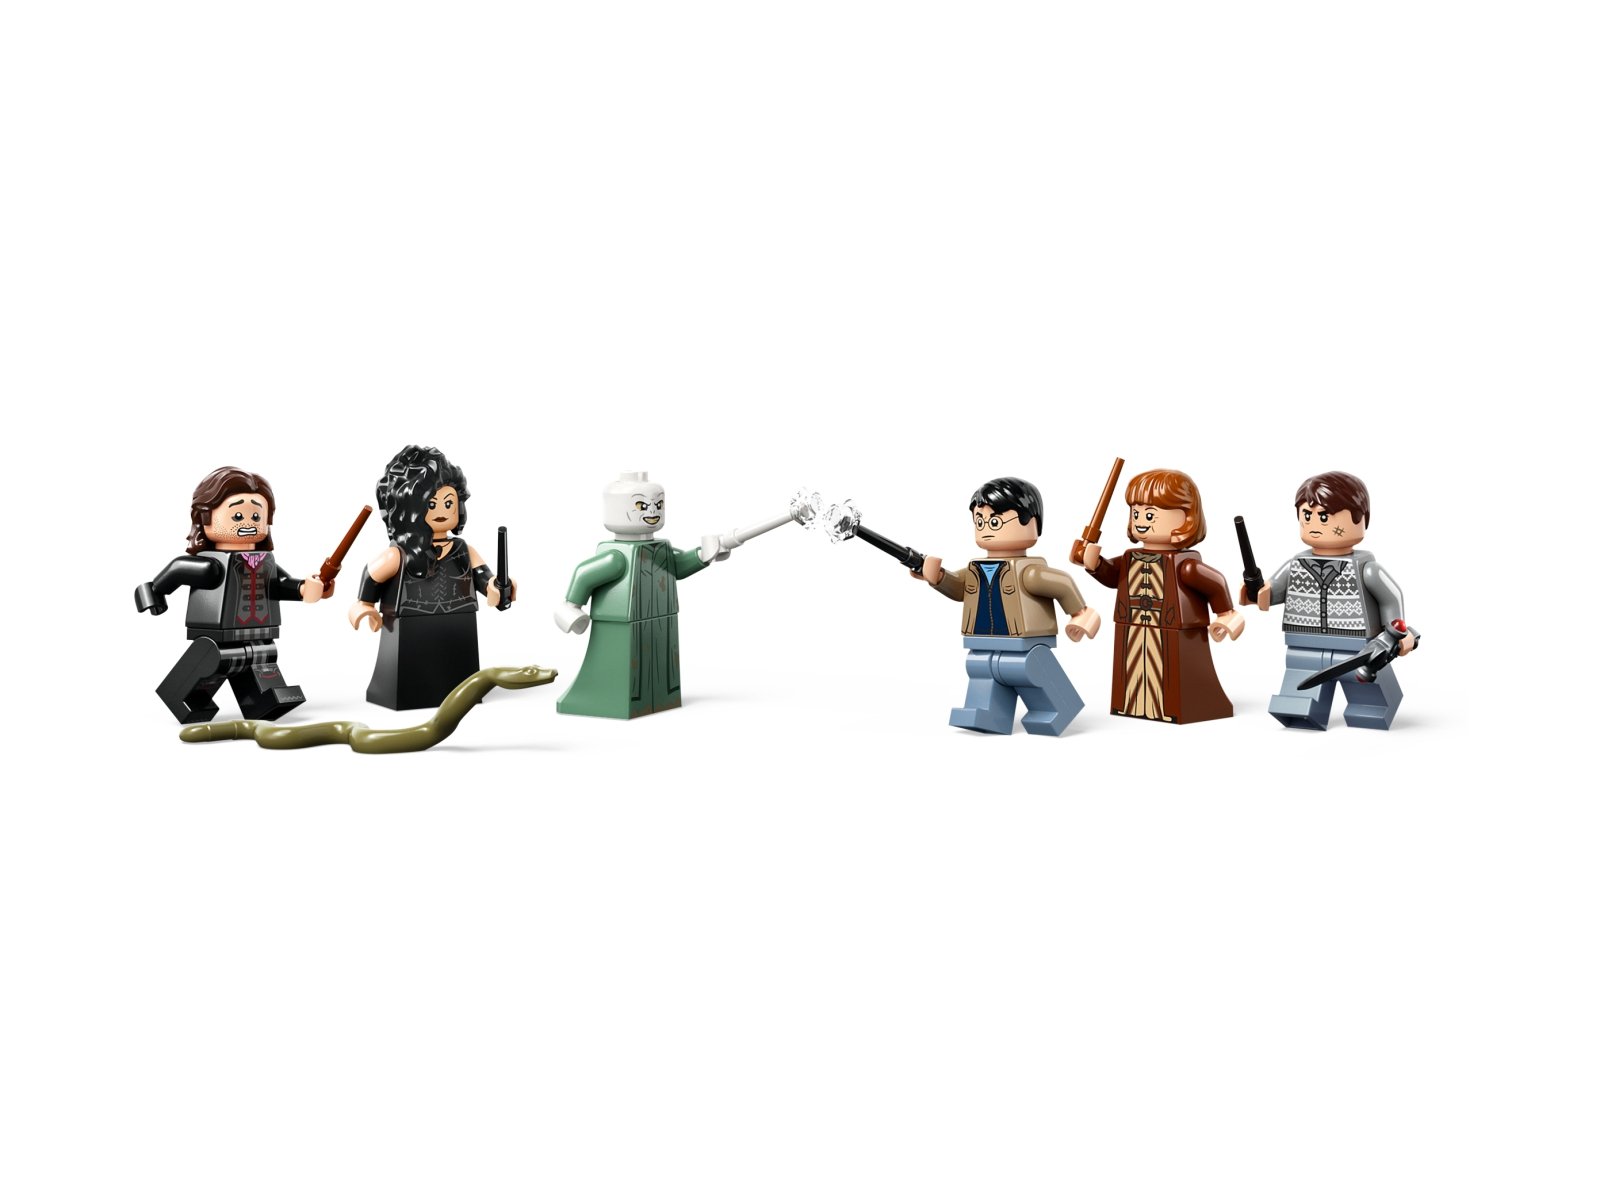 LEGO Harry Potter 76415 Bitwa o Hogwart™